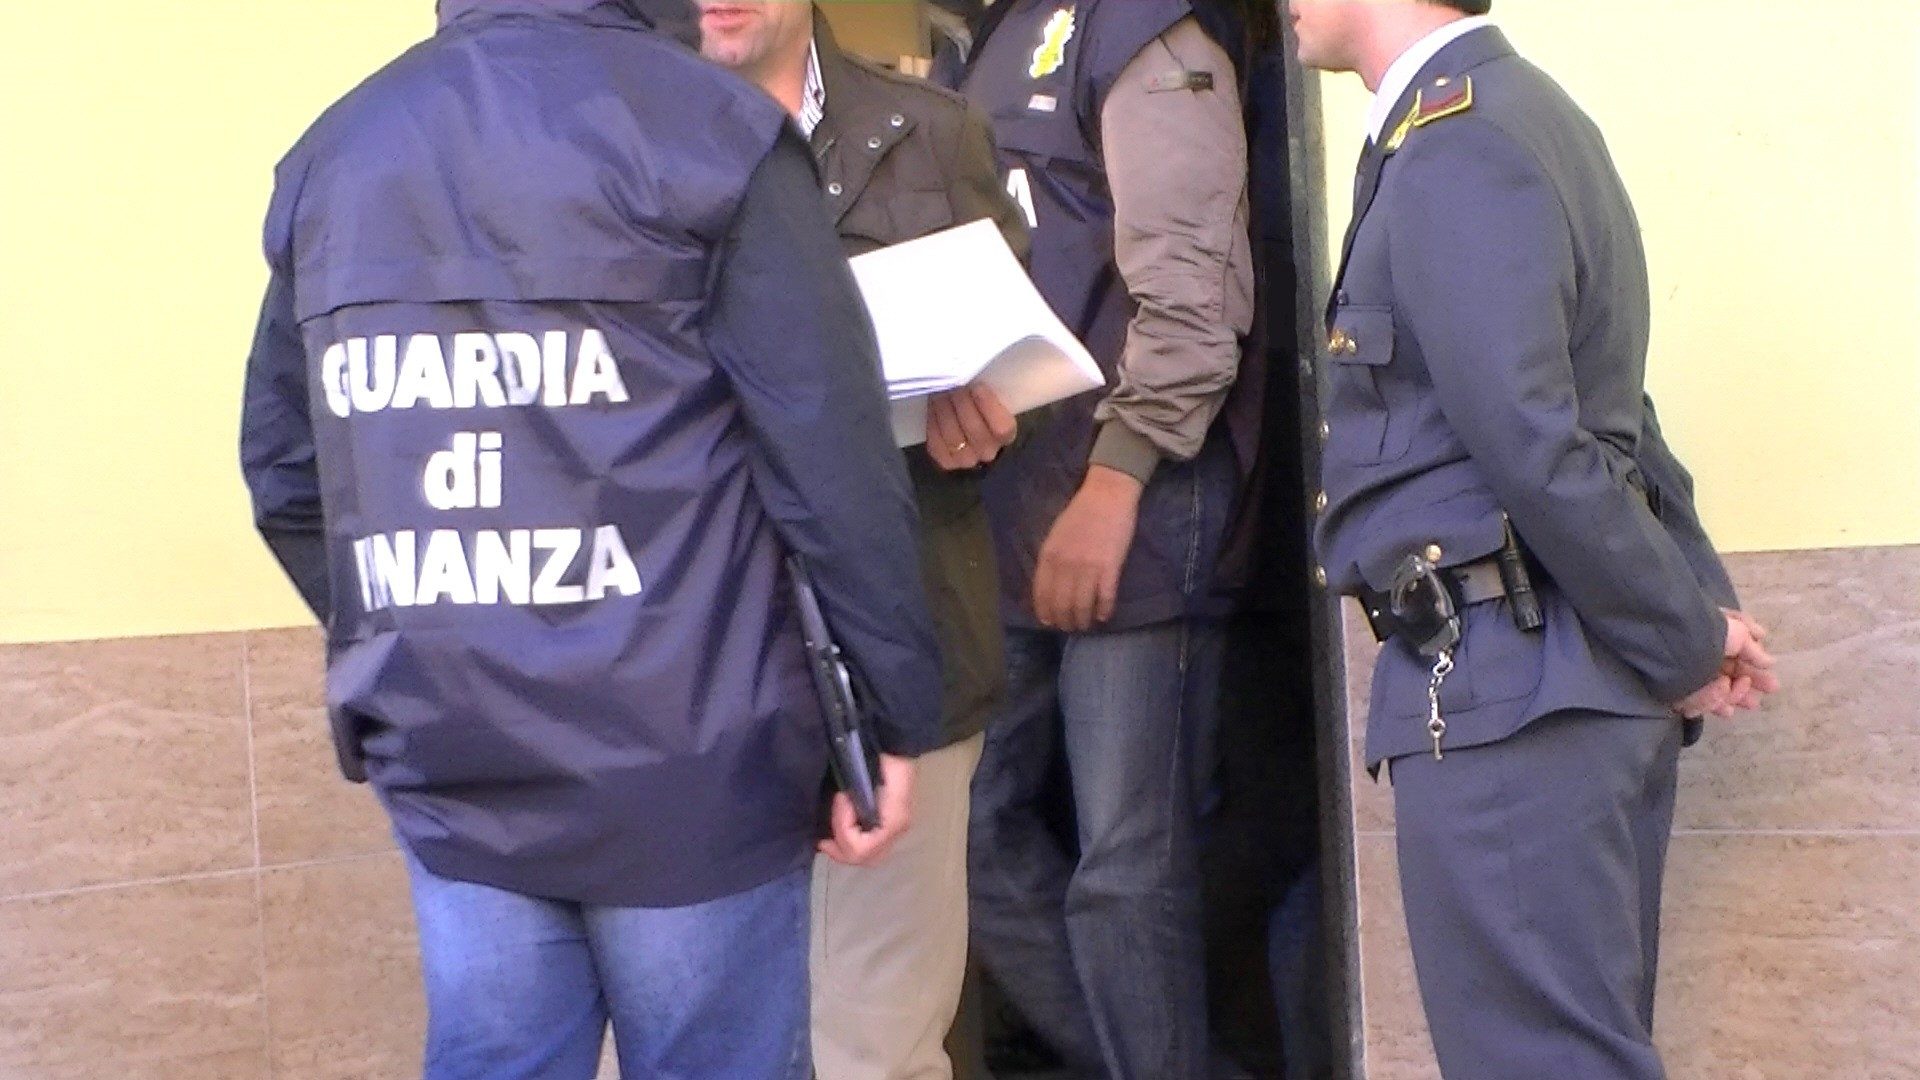 Pescara. Per Bancarotta fraudolenta: arrestati quattro abruzzesi